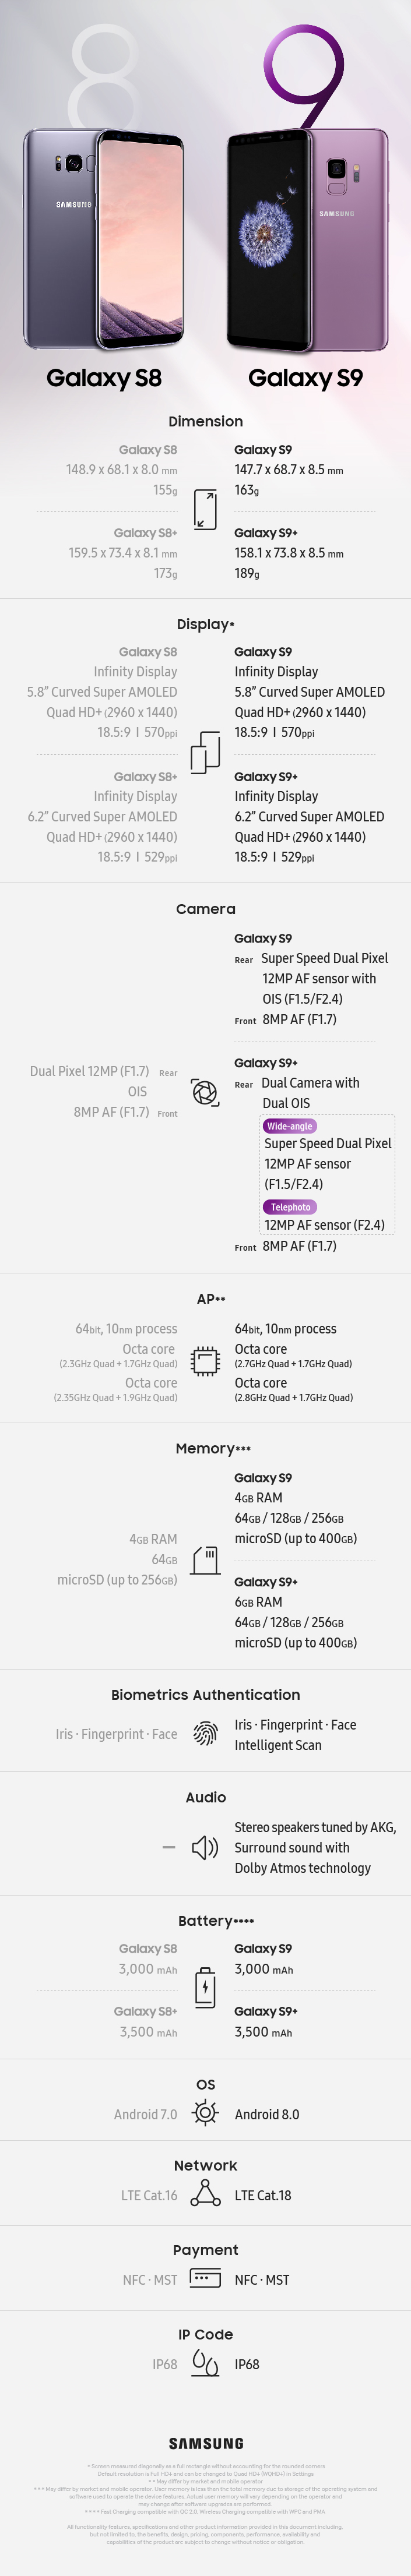 Infographic เปรียบเทียบสเปค Samsung Galaxy S9 vs Galaxy S8